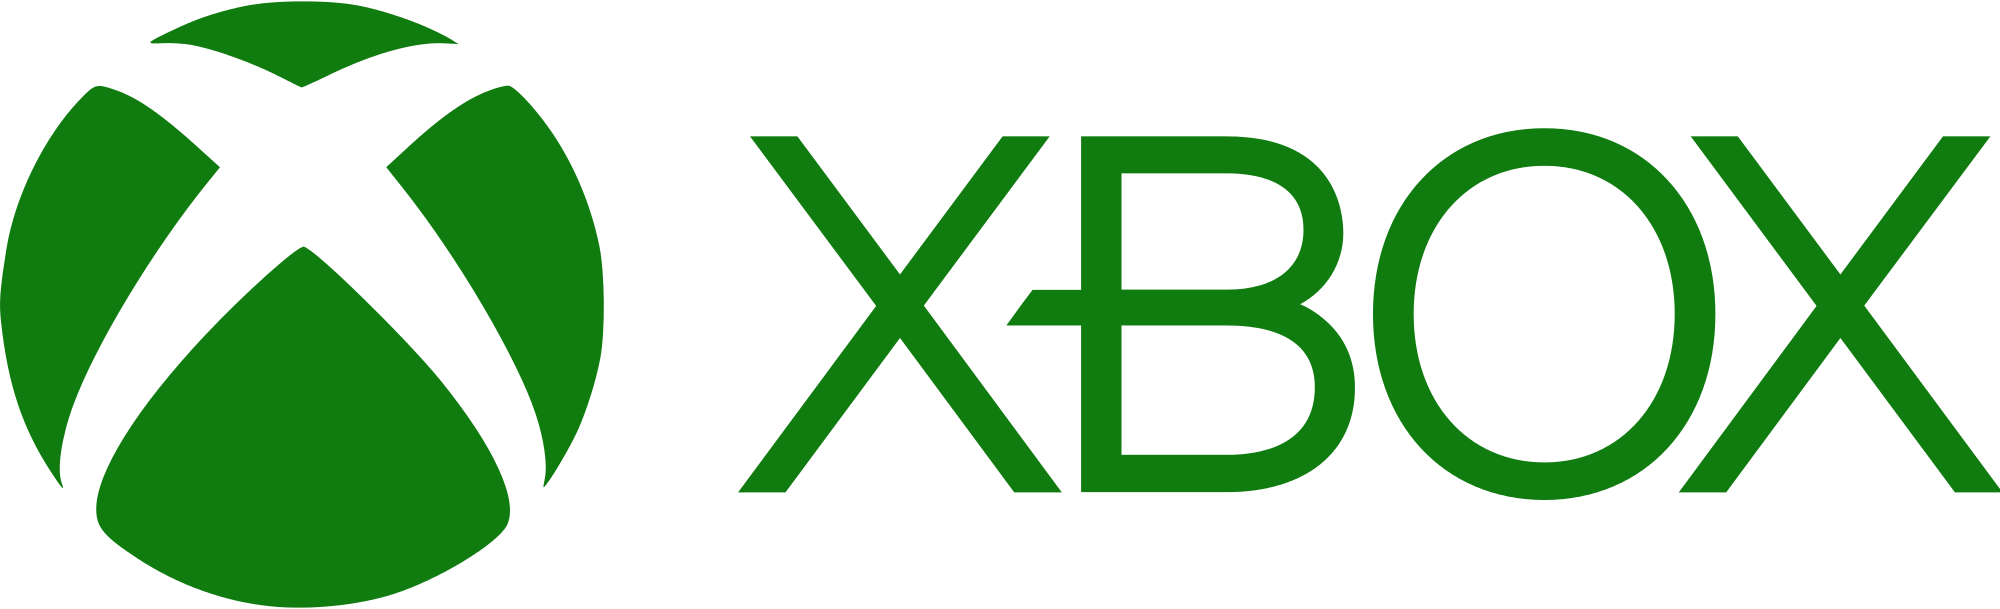 Microsoft Xbox Logo - File:XBOX logo 2012.svg - Wikimedia Commons